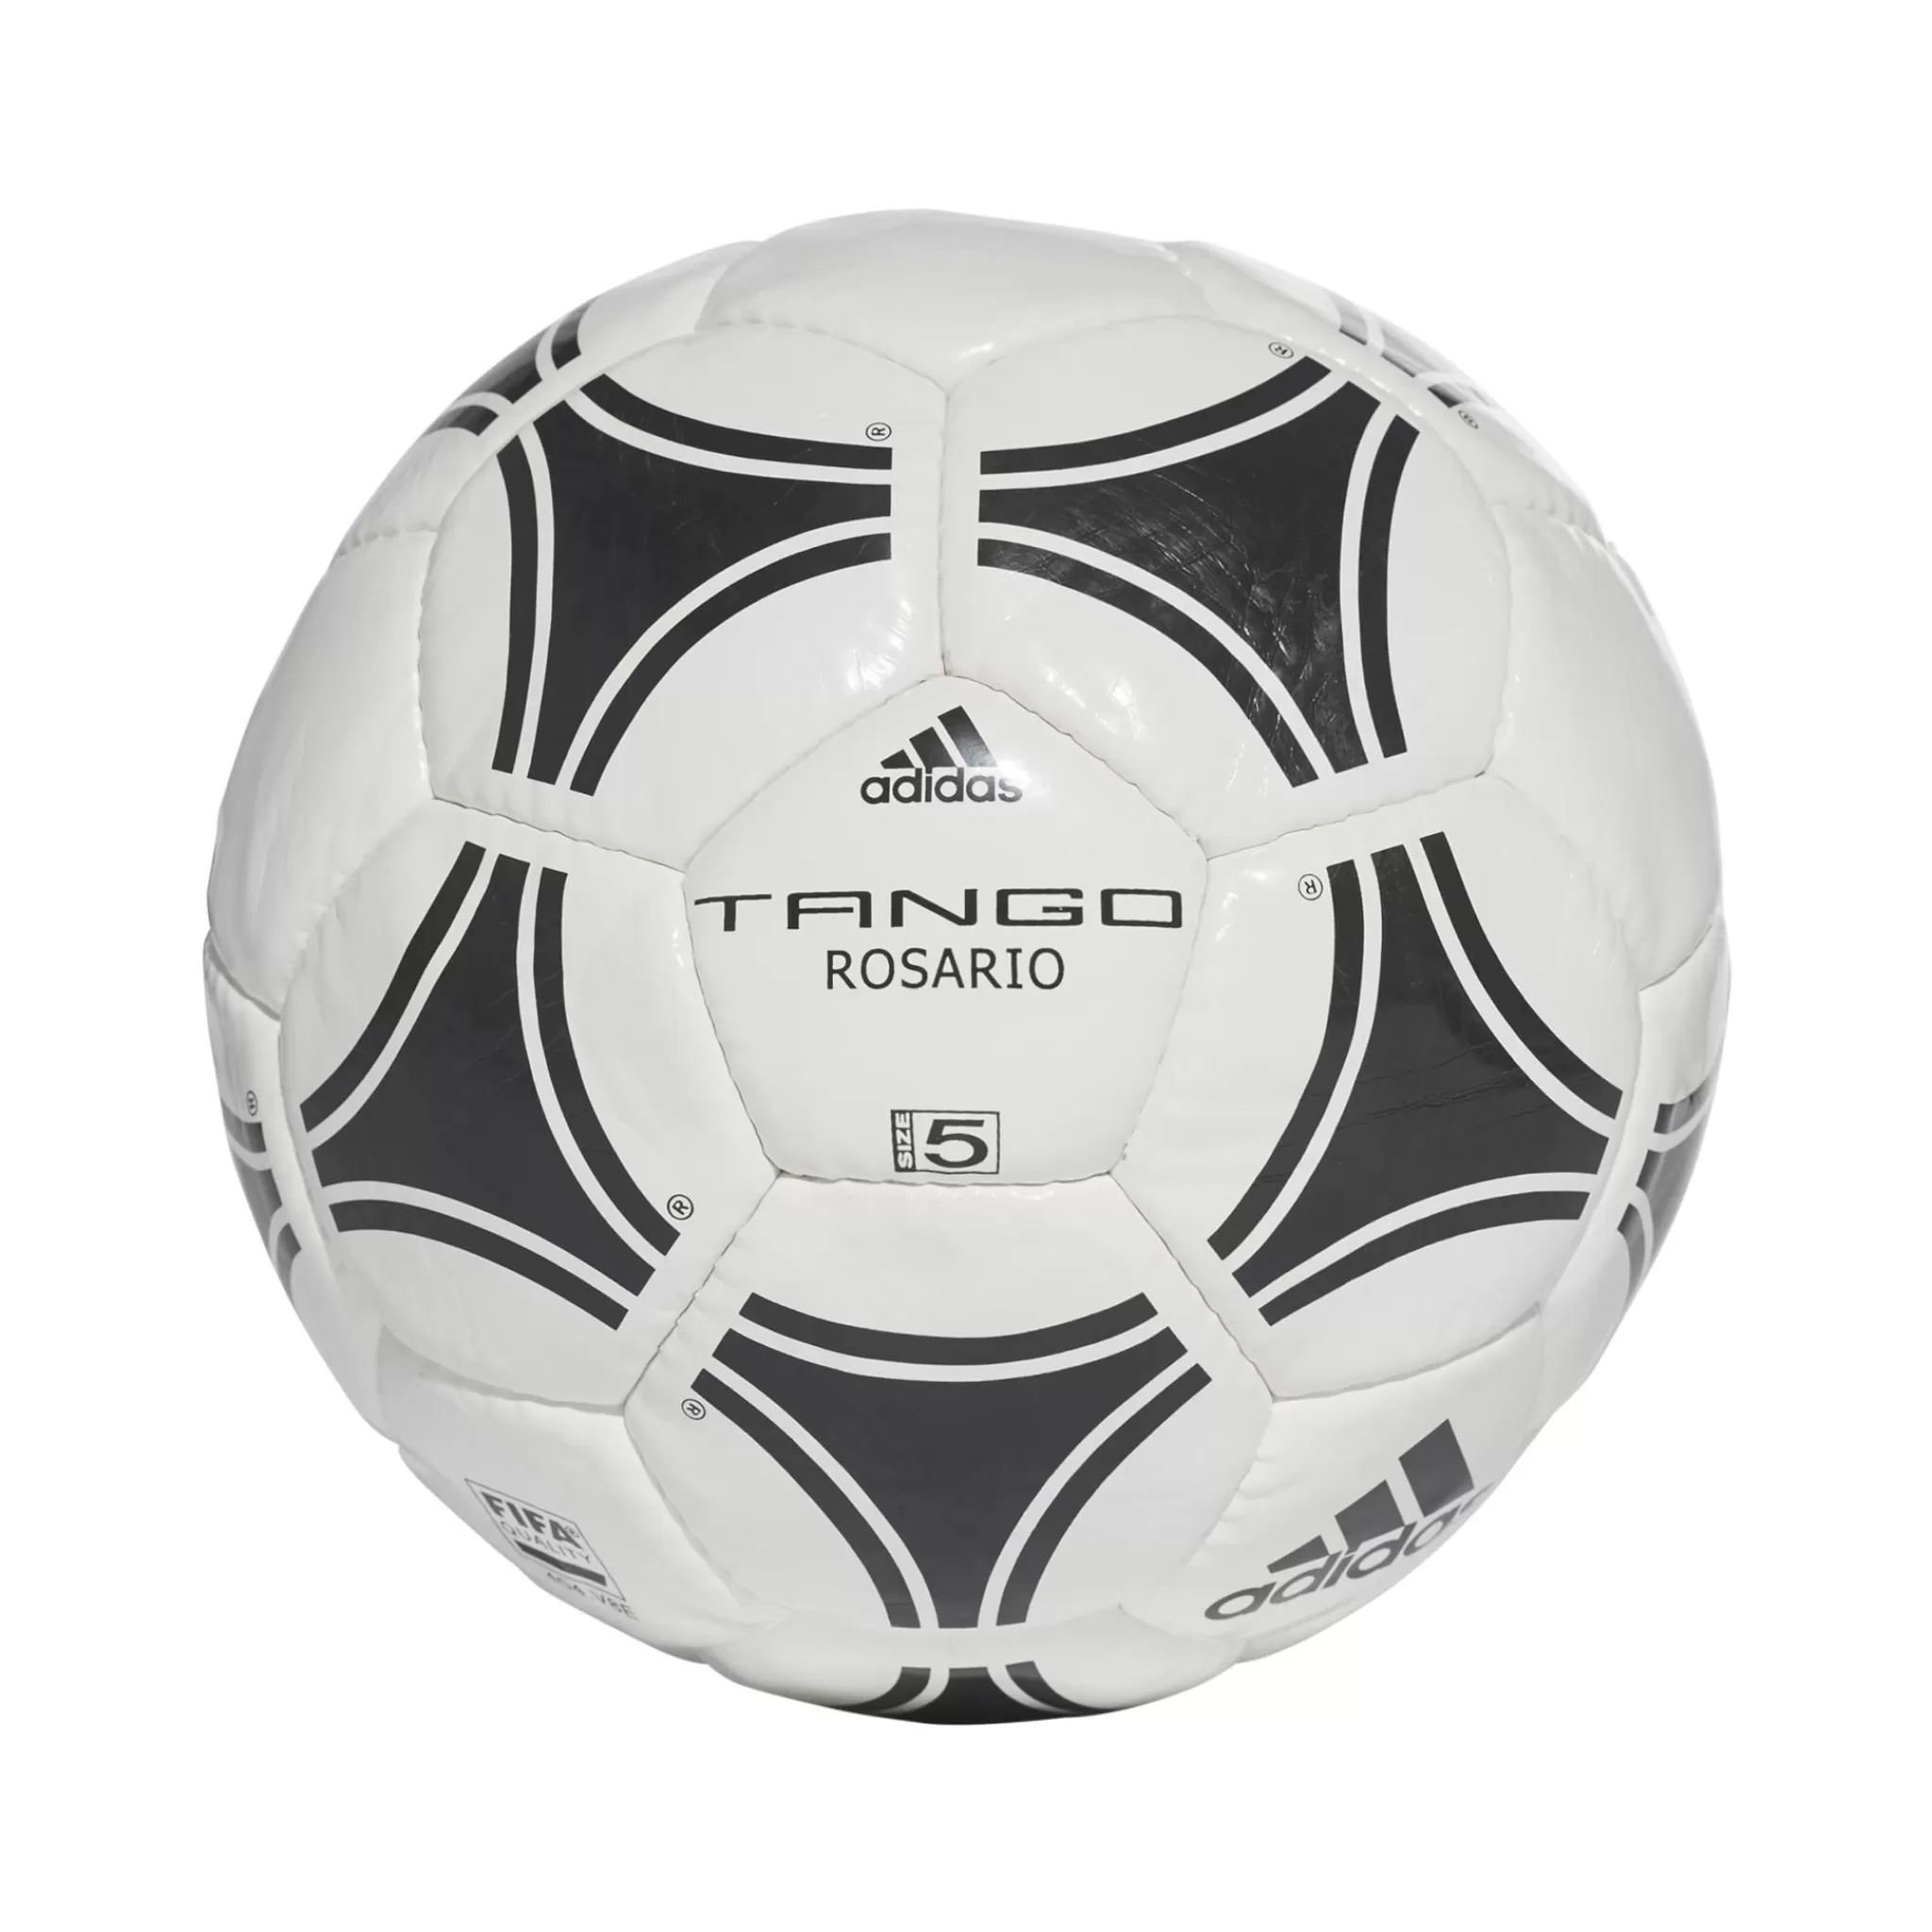 Best adidas Tango Rosario, Fotball